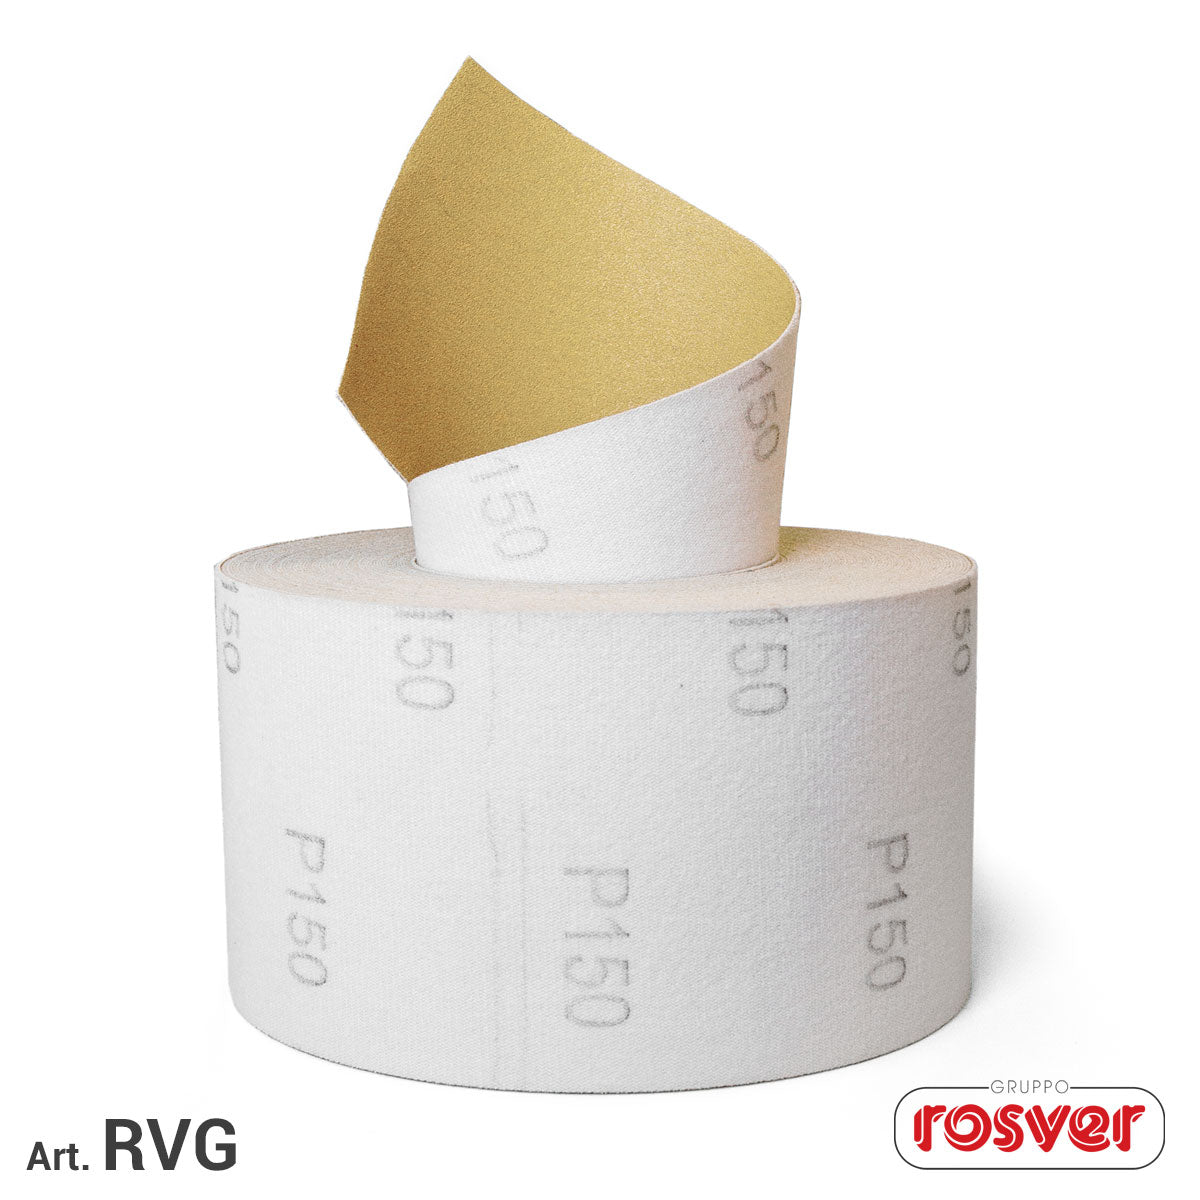 Tear-off self-lubricating paper rolls - Rosver - RVG H.115 MT25 - Conf.1pz